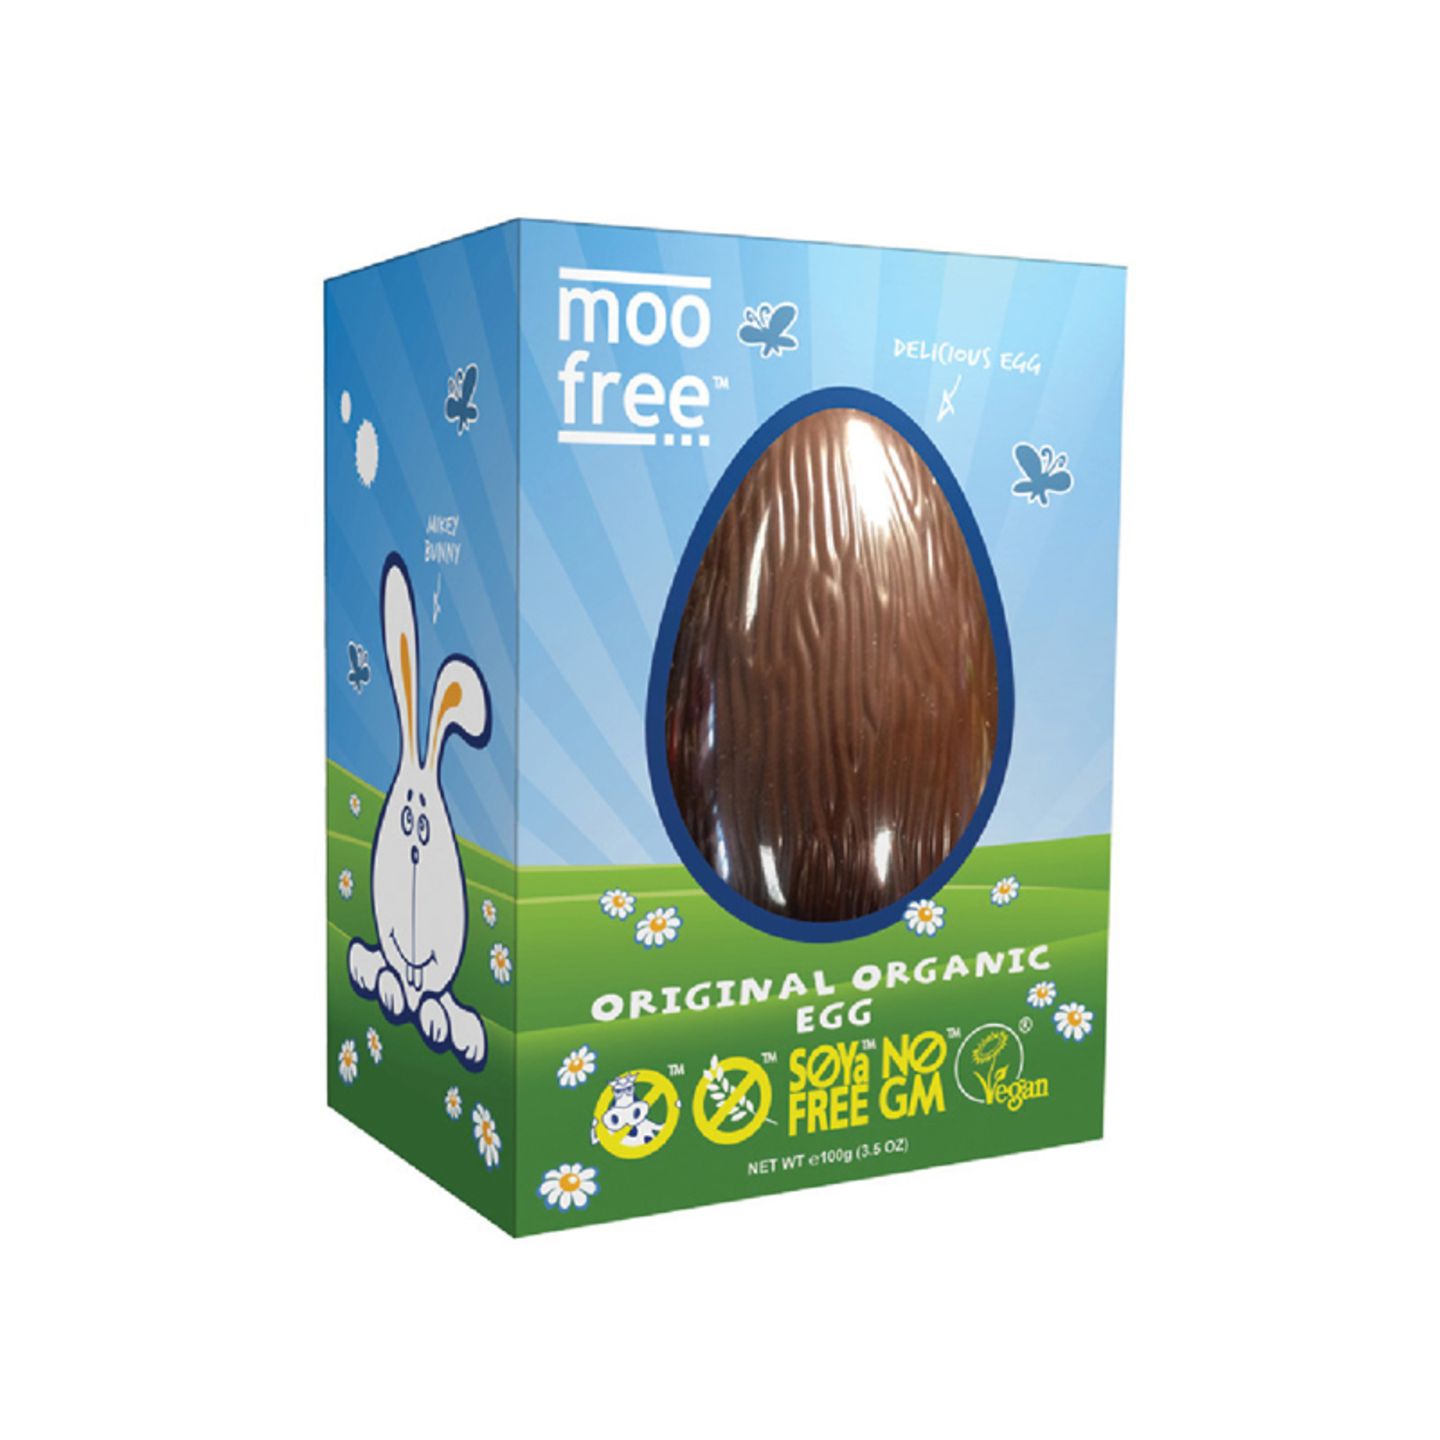 Schokoladeneier im Test: moo-free vegan Egg